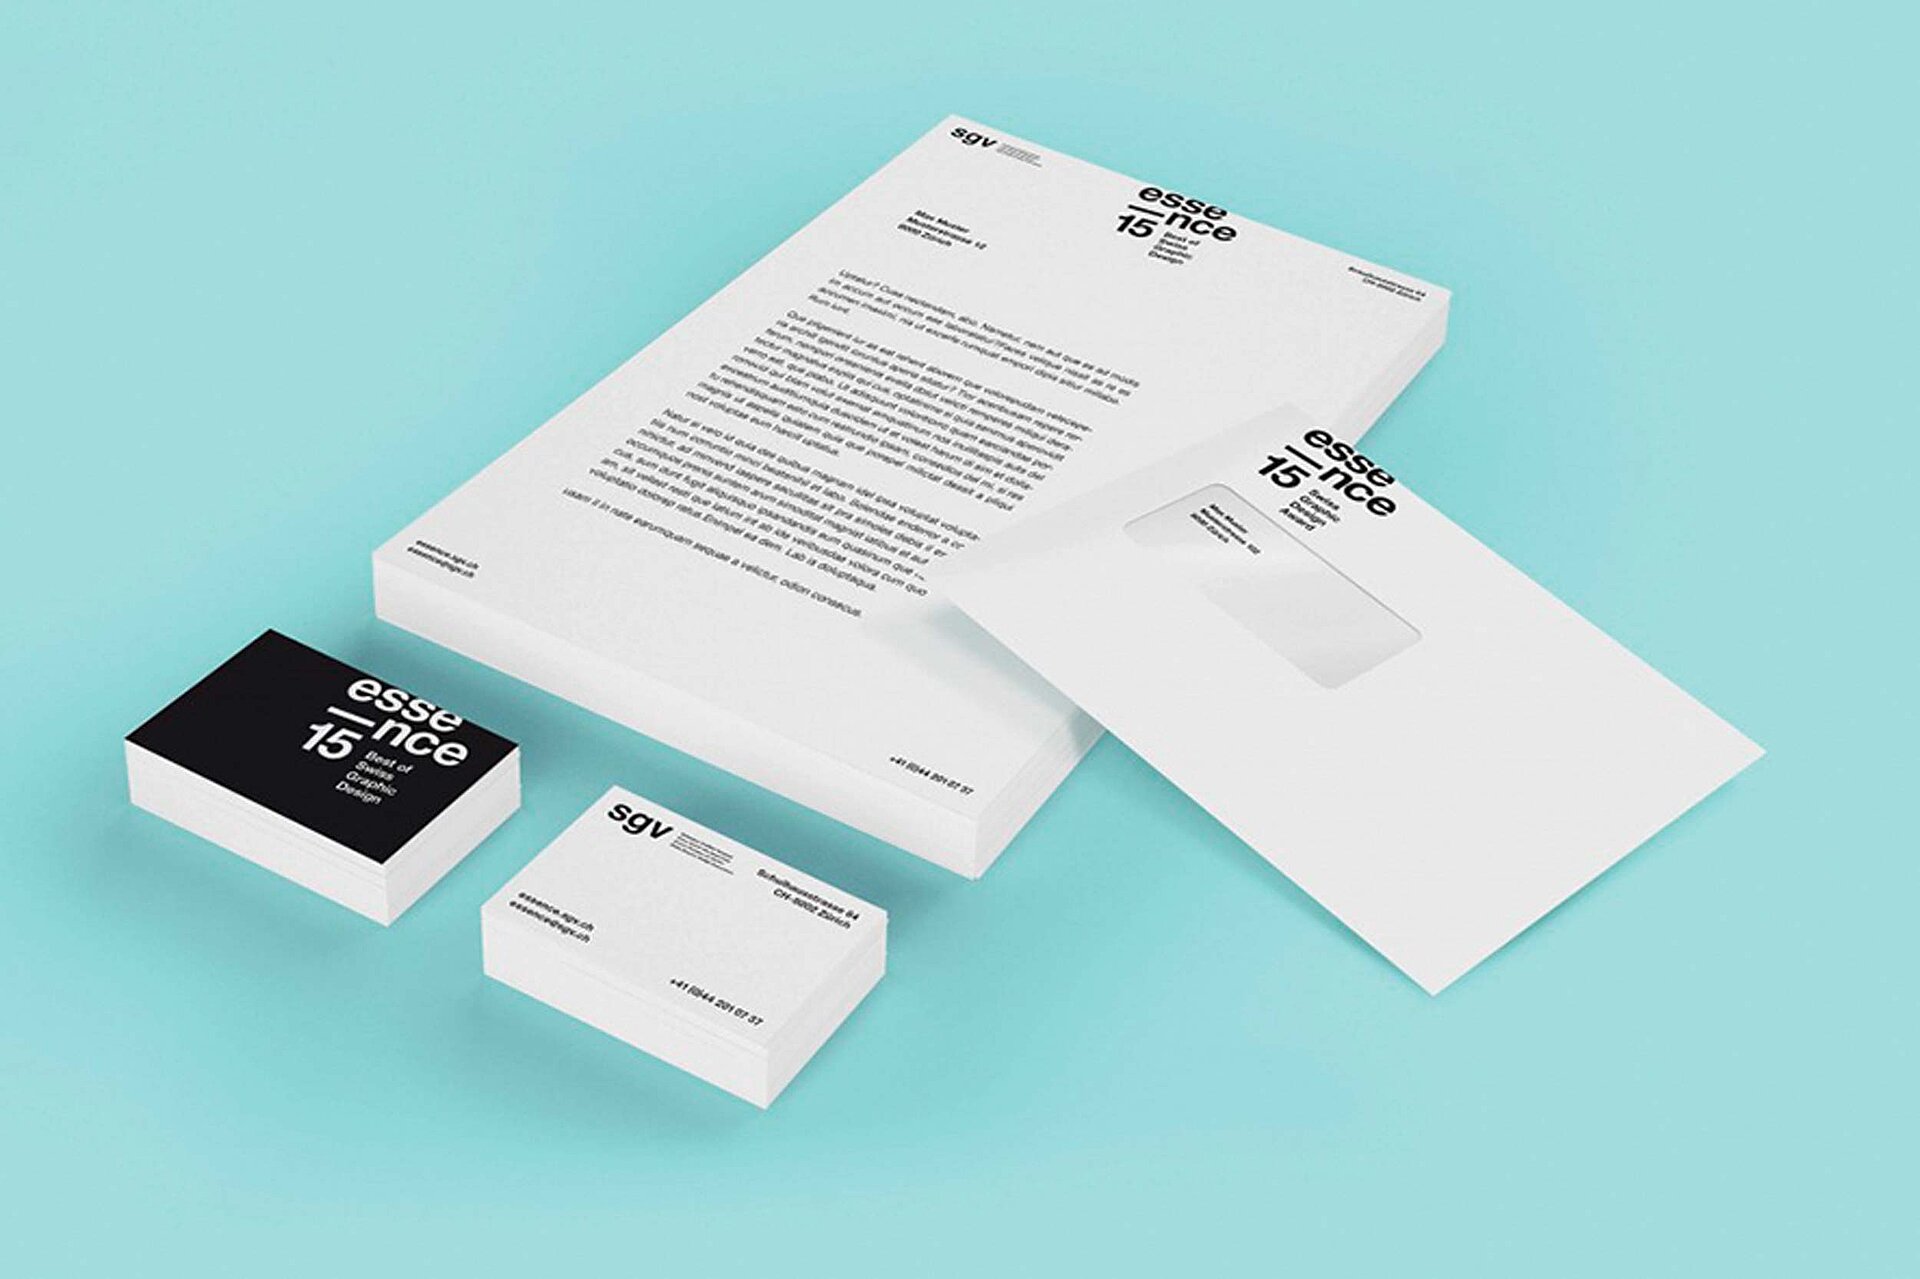 essence swiss graphic design briefschaften briefpapier visitenkarte kuvert branding bern